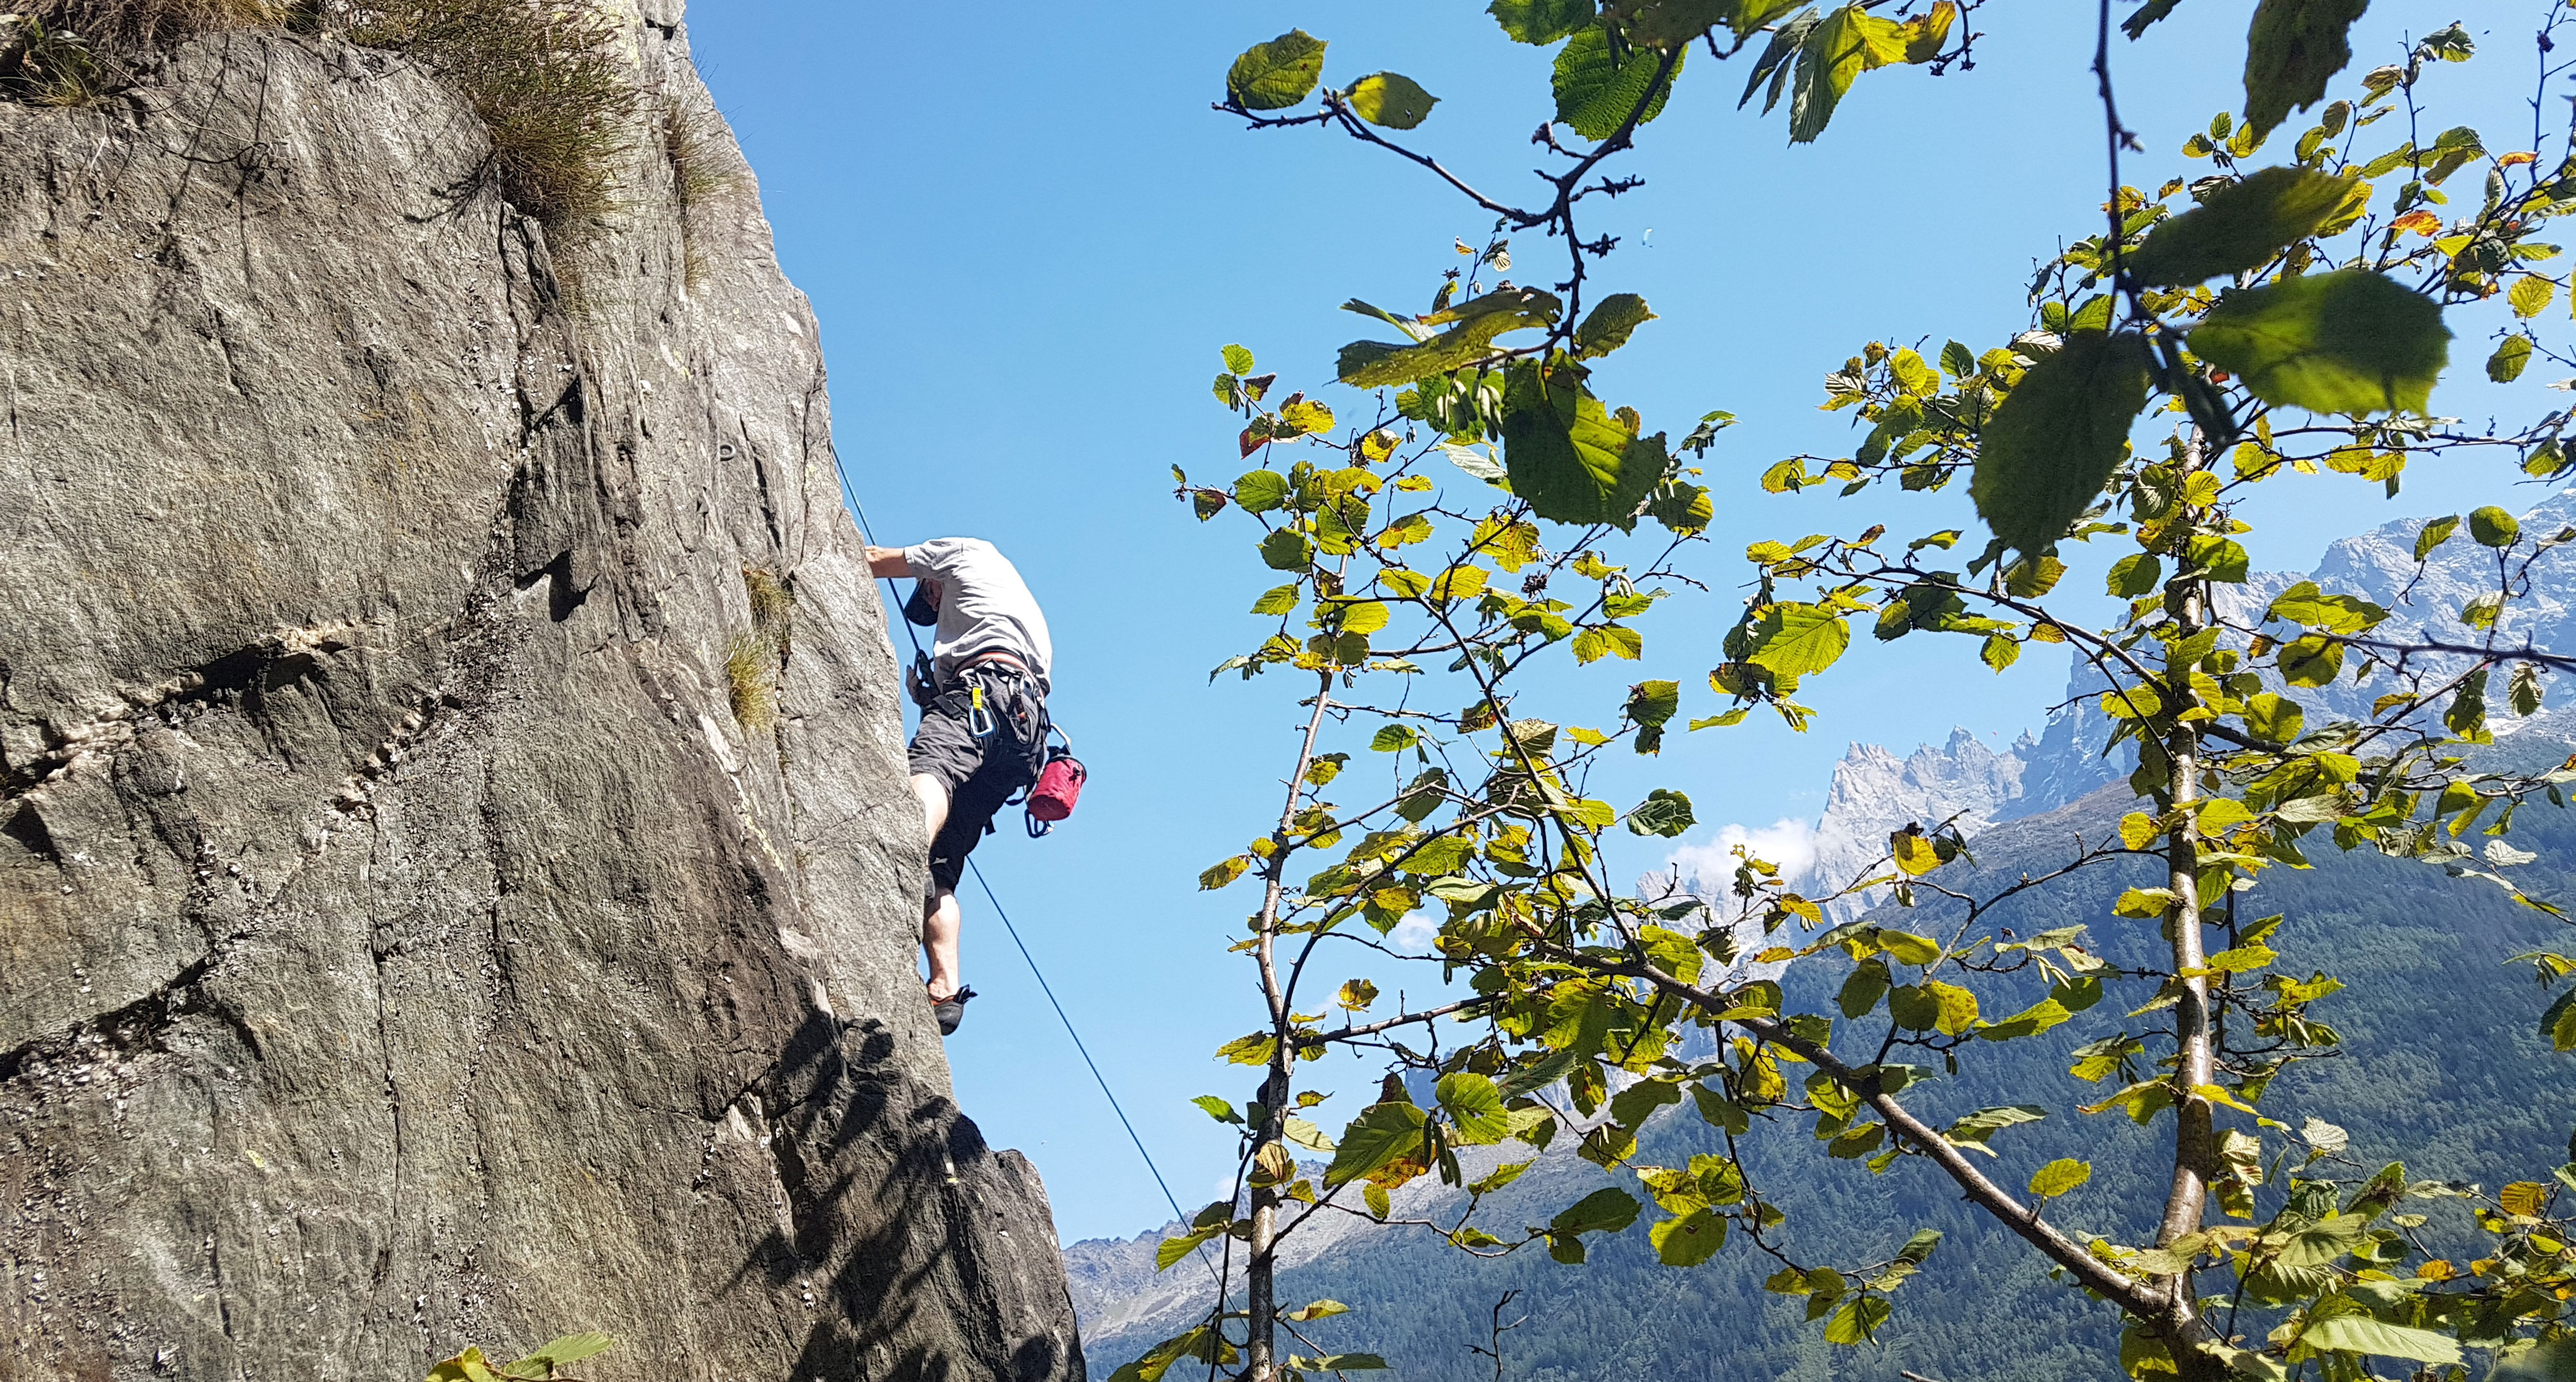 image shoiwng a person rock climbing